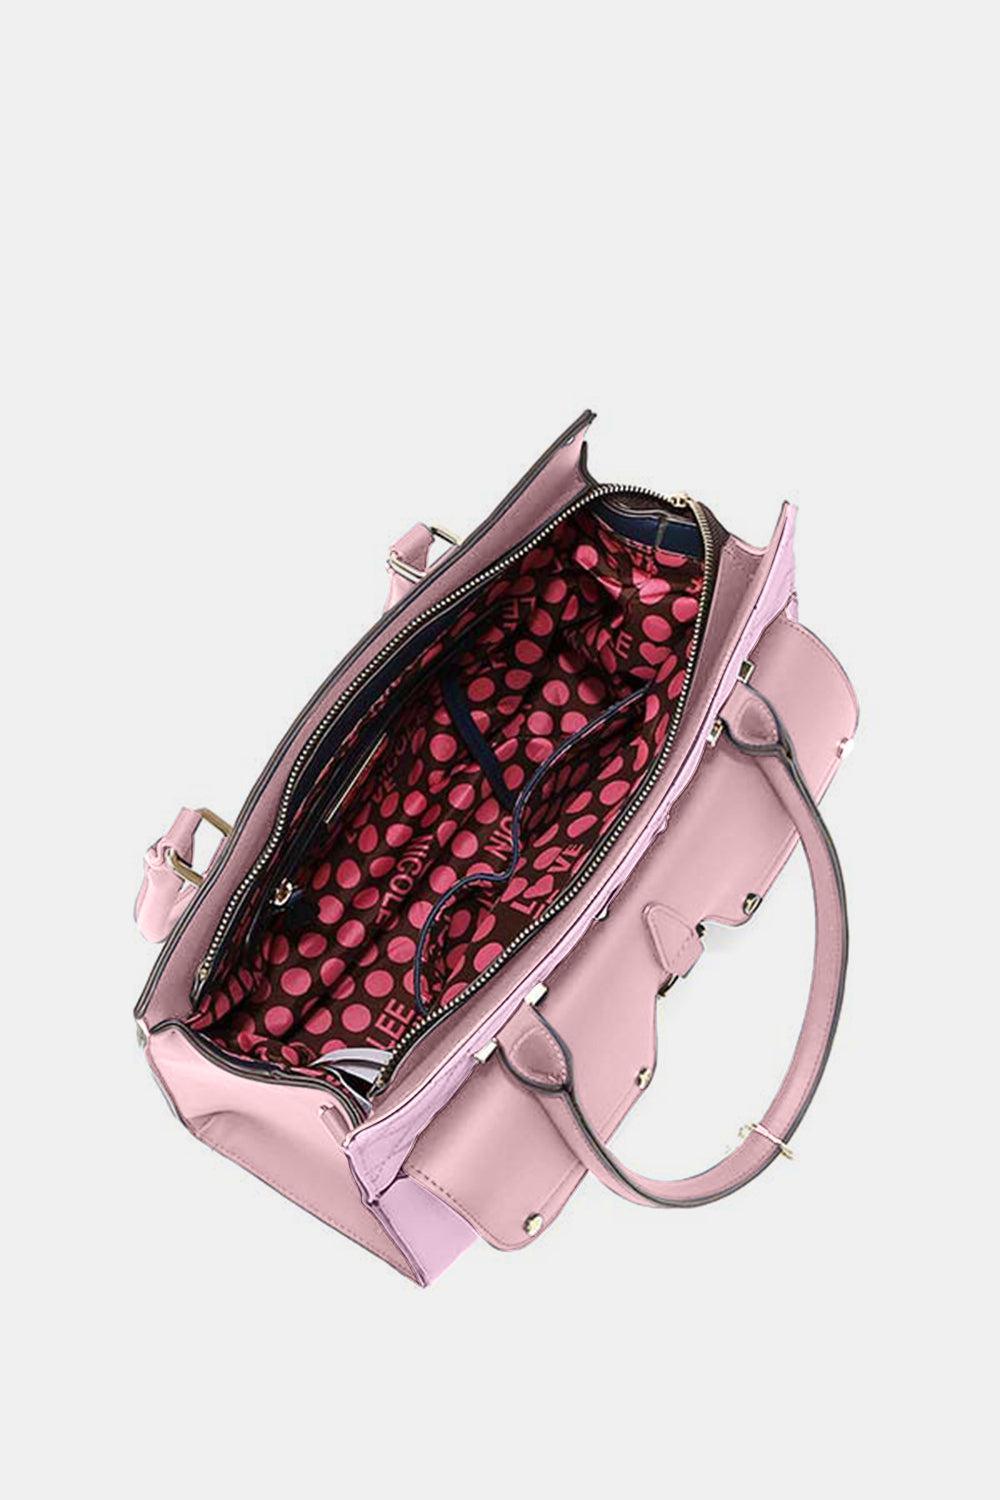 a pink handbag with a pink polka dot design